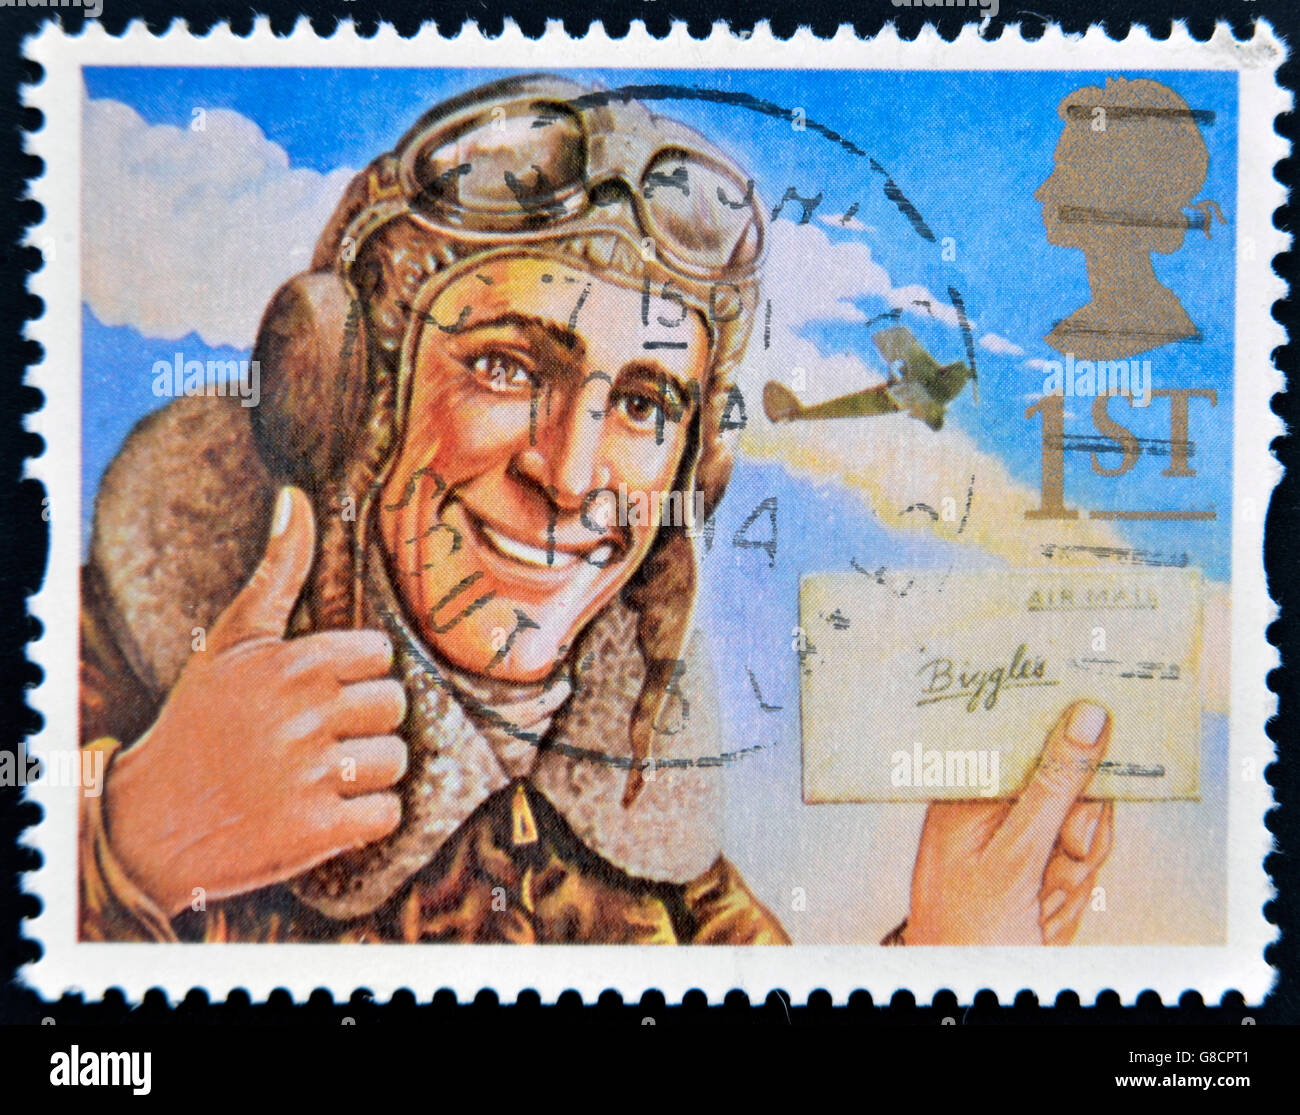 UNITED KINGDOM - CIRCA 1994: A stamp printed in Great Britain shows the comic hero, Biggles, circa 1994 Stock Photo